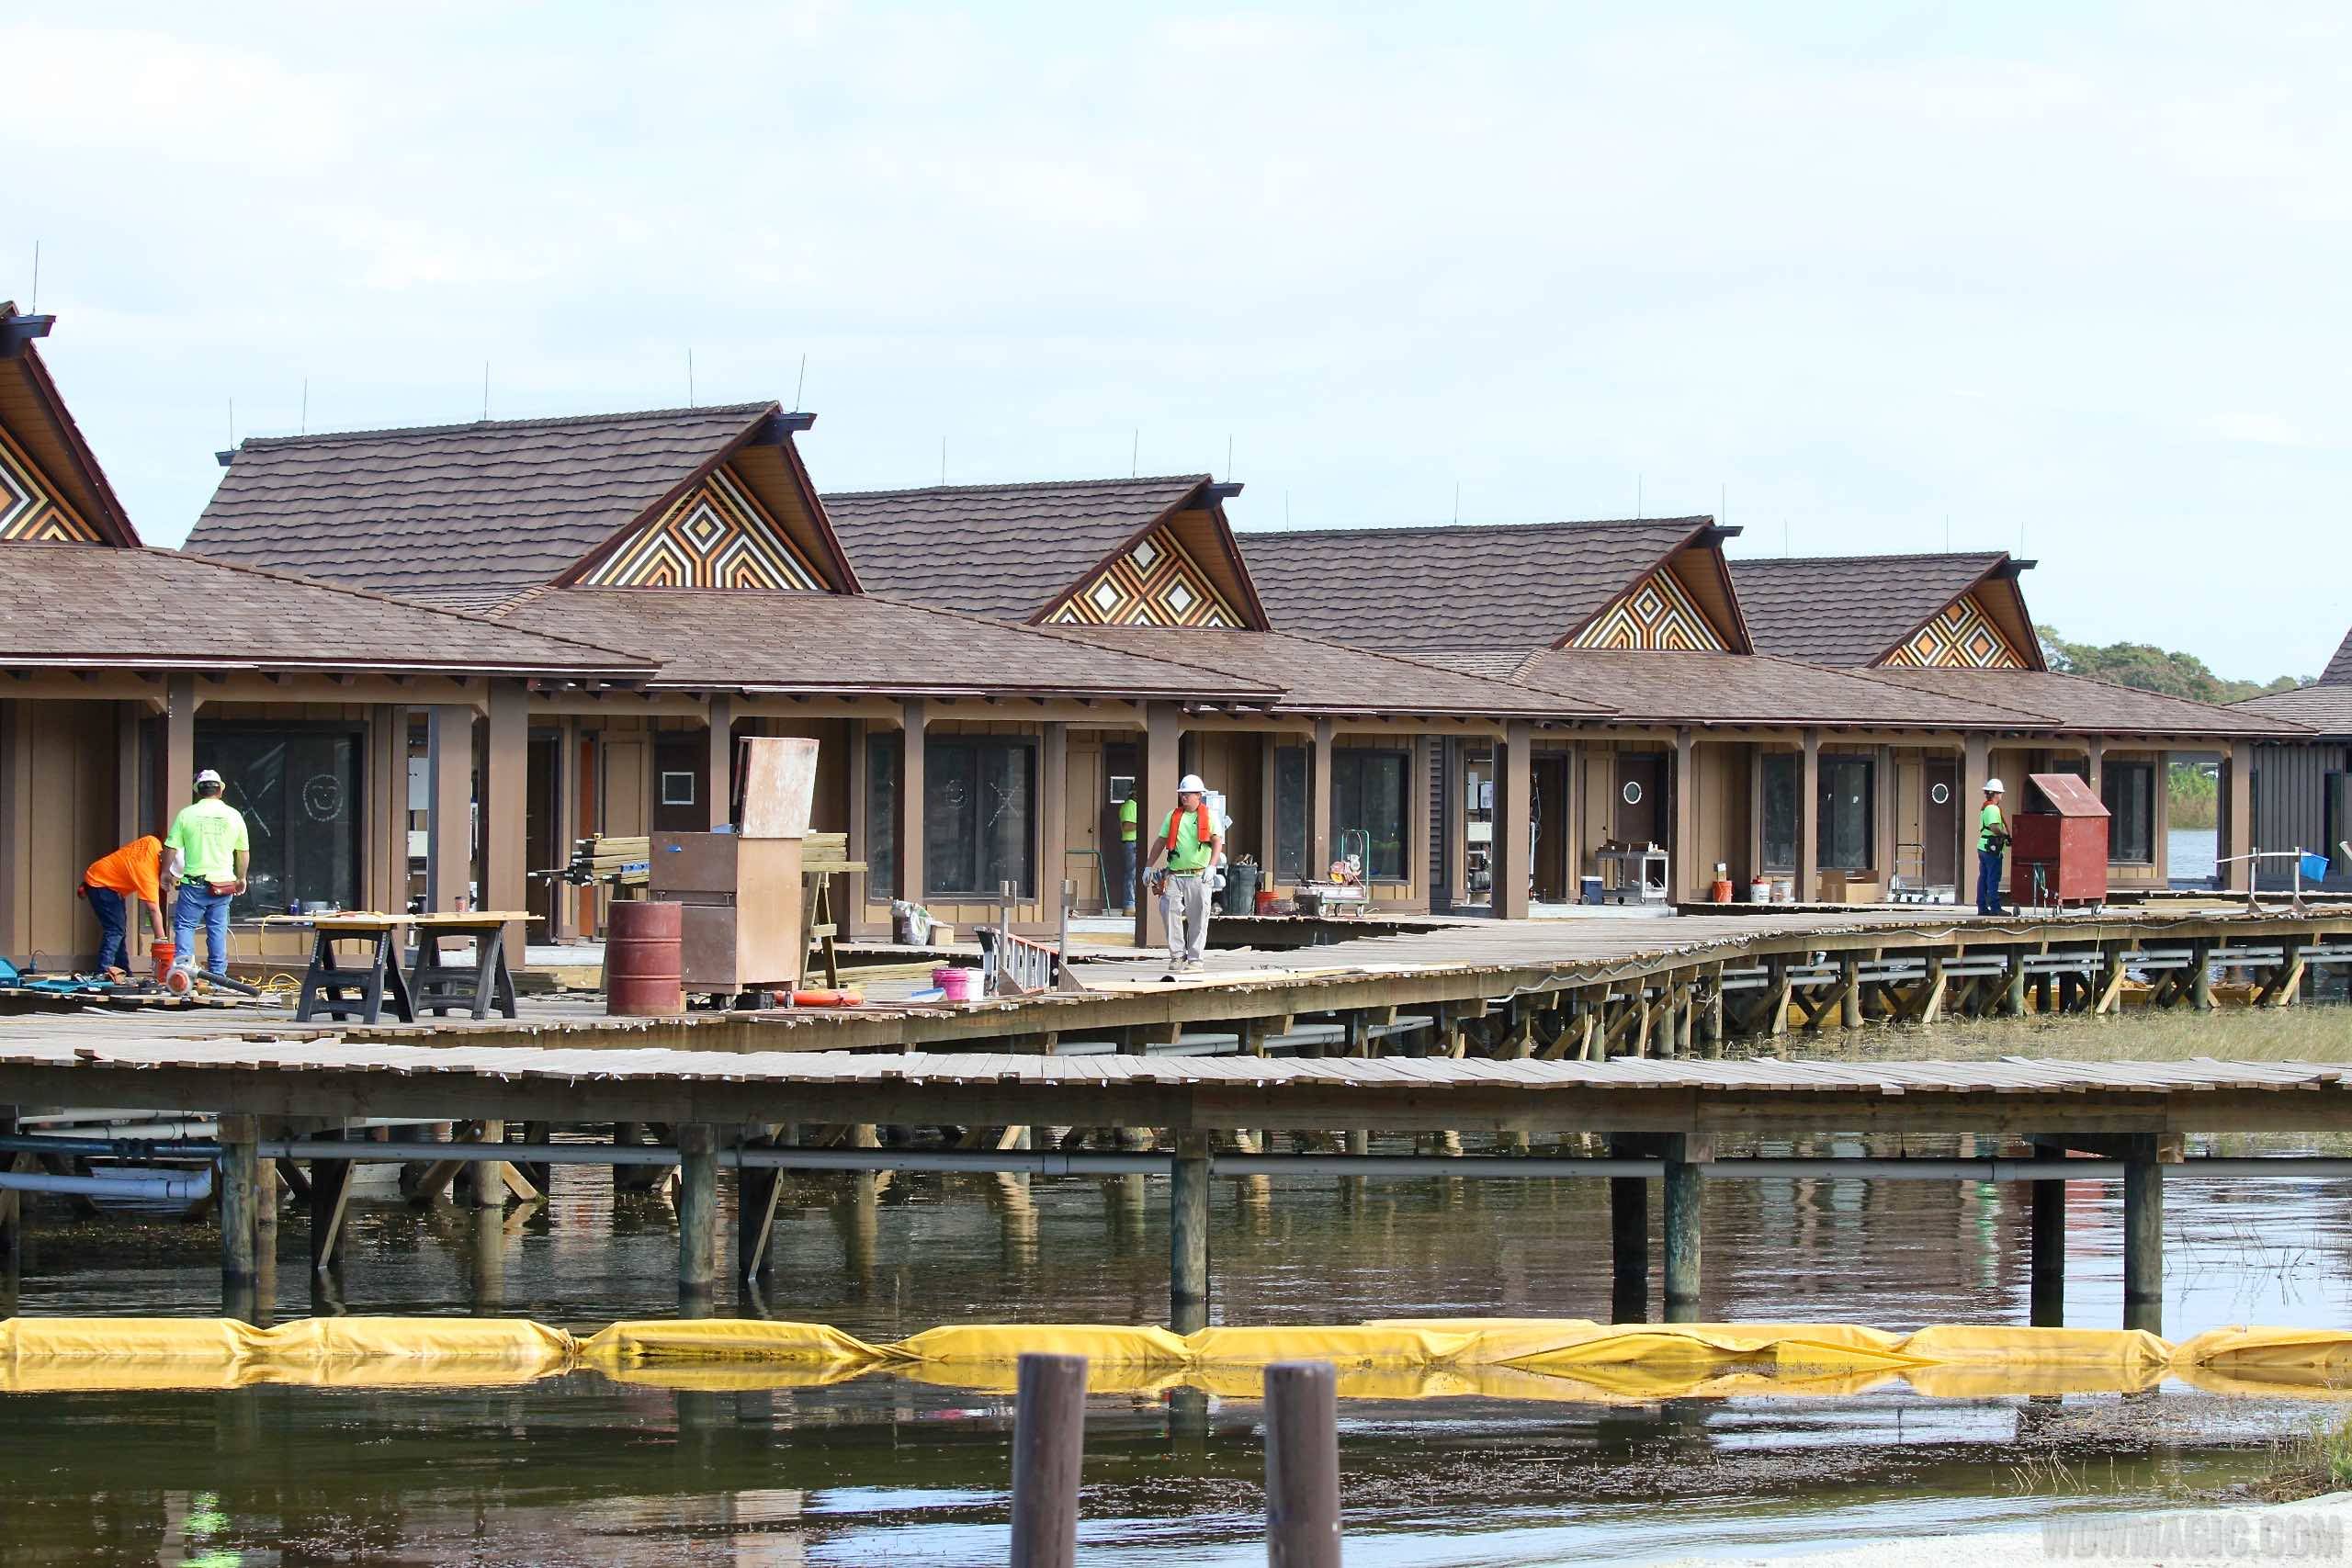 PHOTOS - The lagoon villas under construction at Disney's Polynesian Village Resort